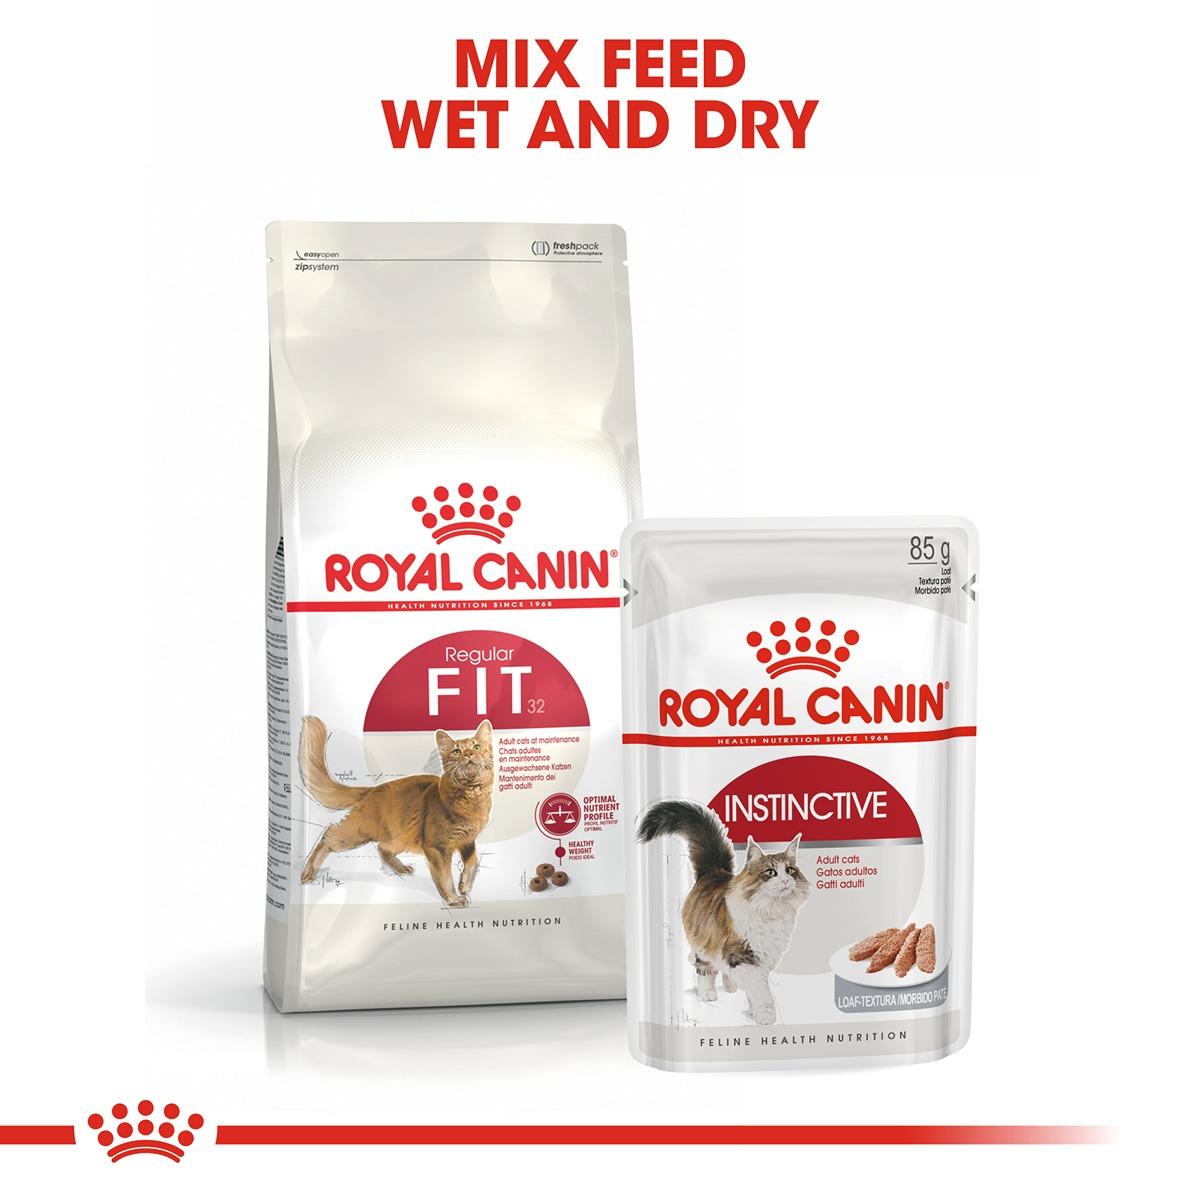 Royal Canin Regular Fit Dry Cat Food